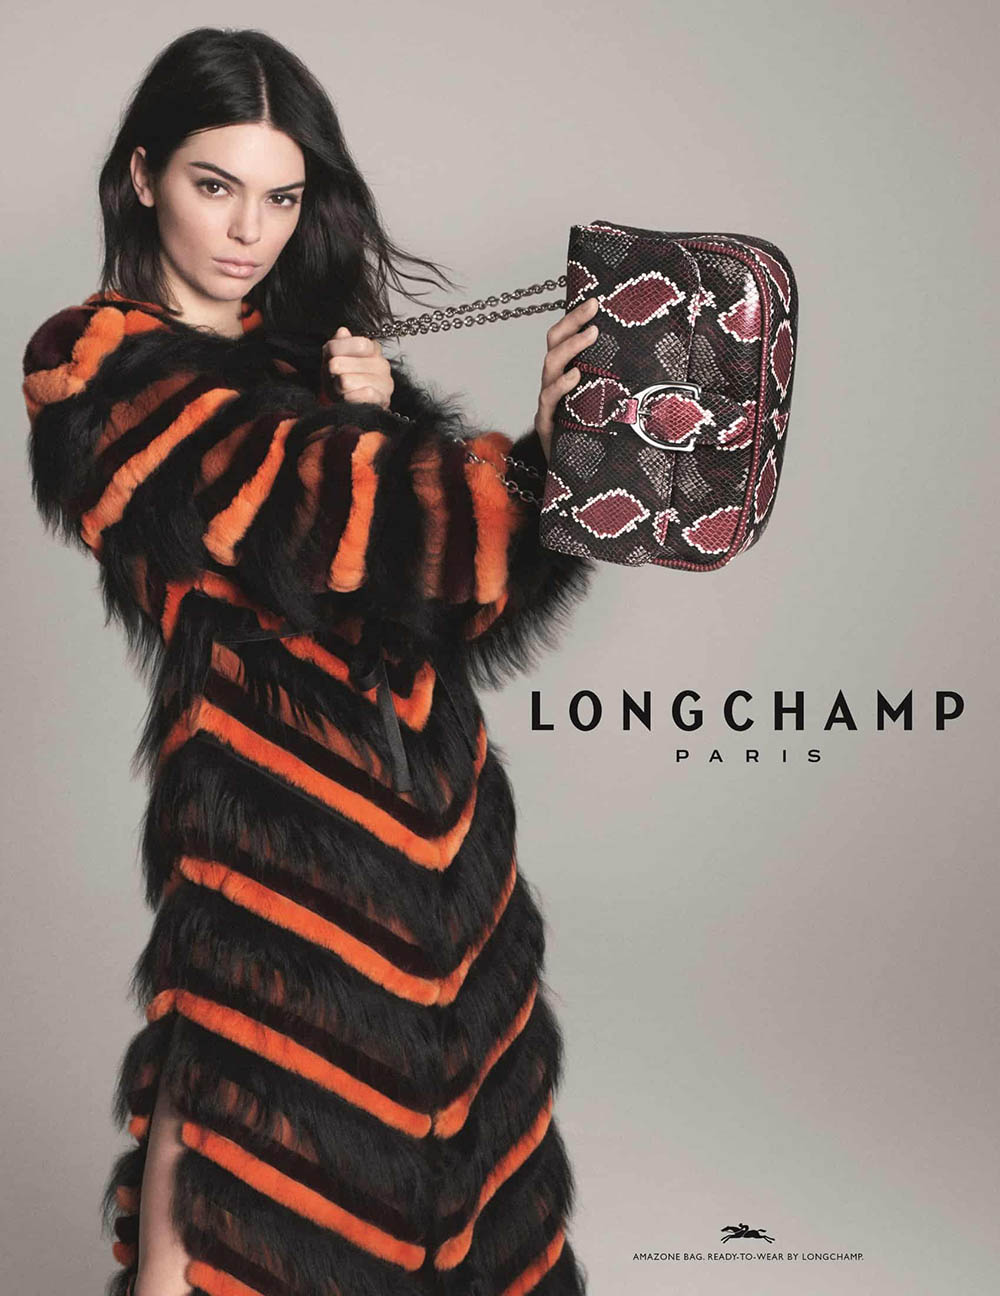 Longchamp Fall Winter 2018 Campaign